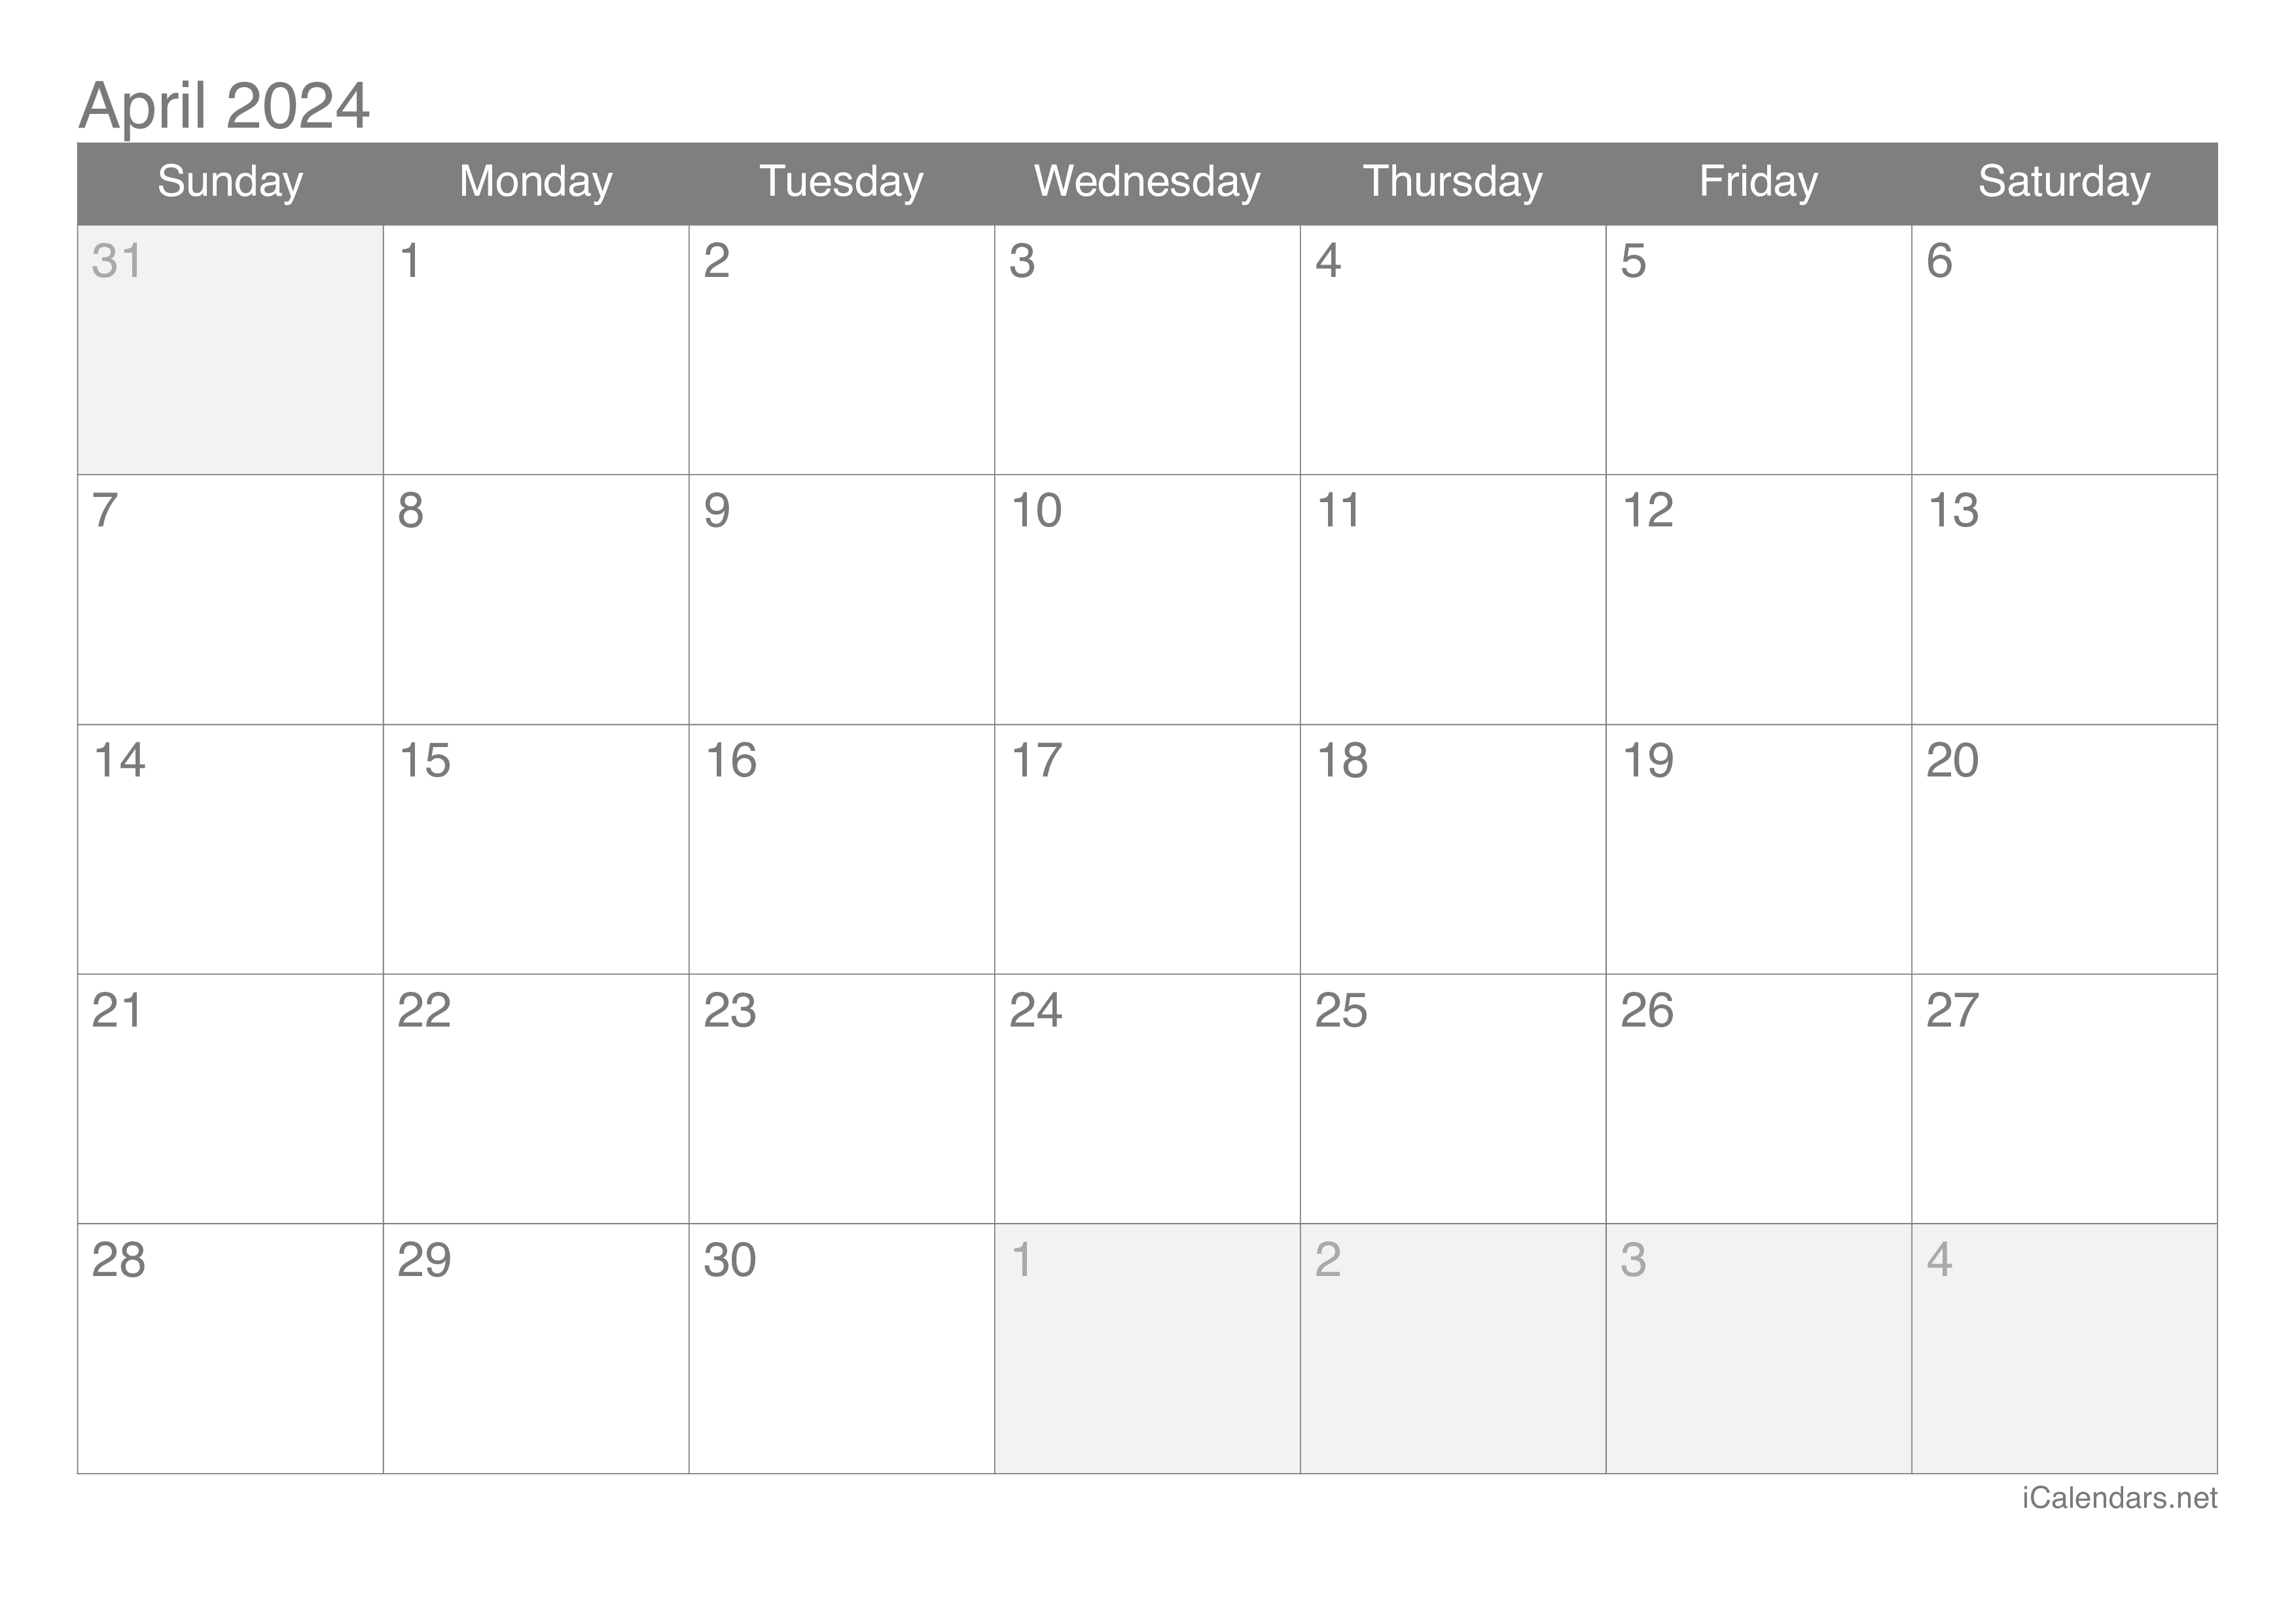 april-2024-calendar-free-printable-calendar